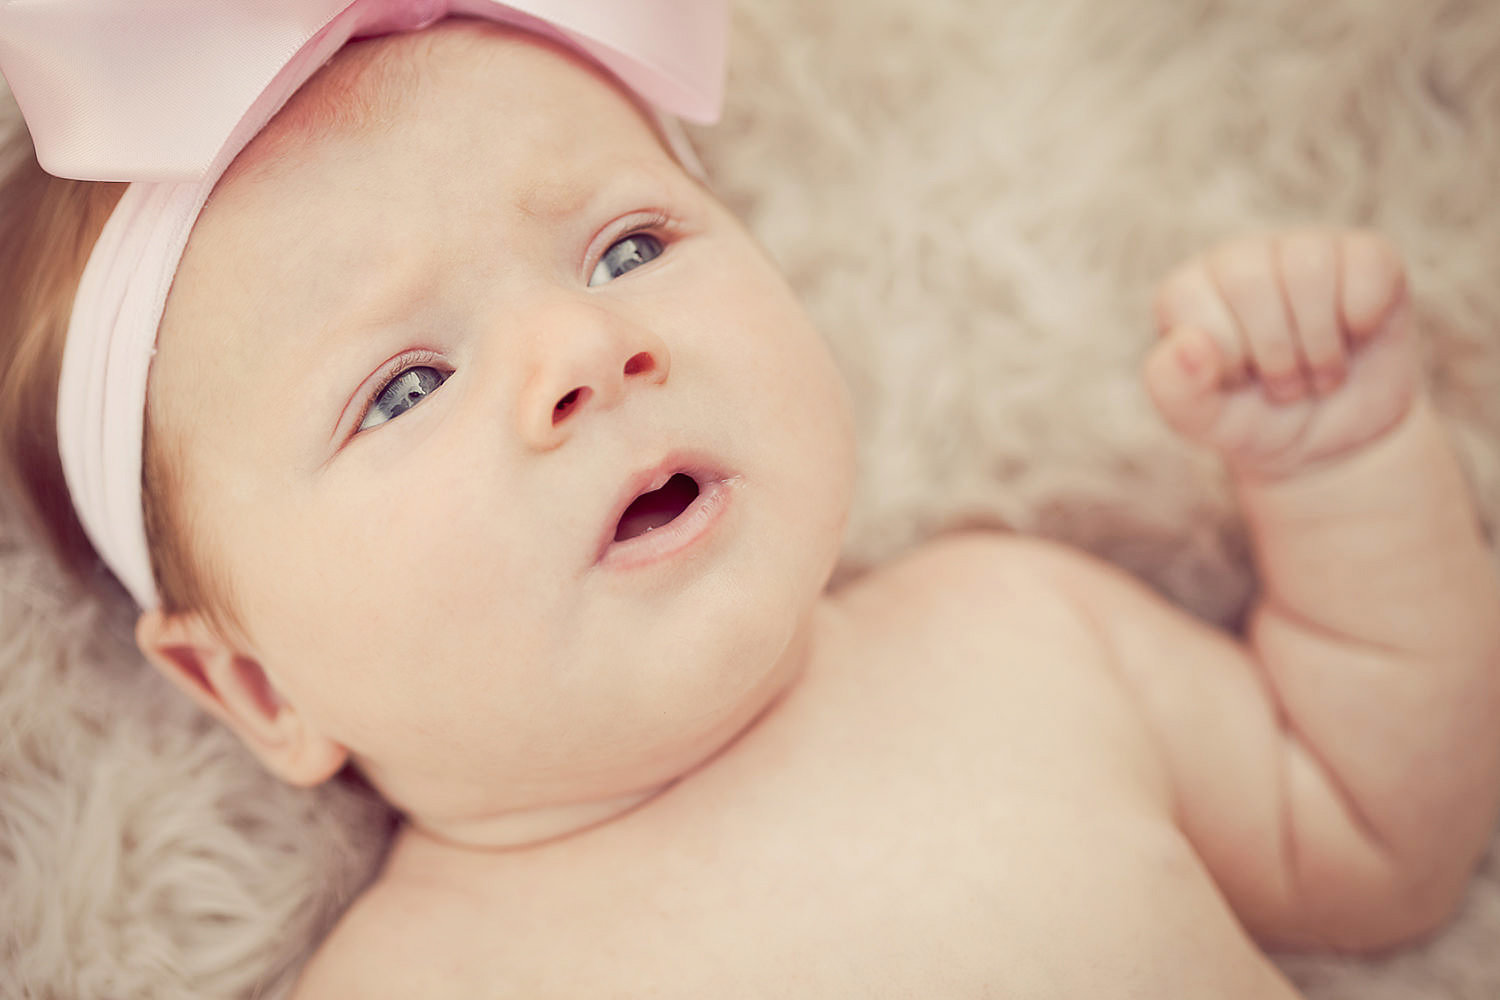 san diego newborn photographer | newborn with pink bow with a big bow